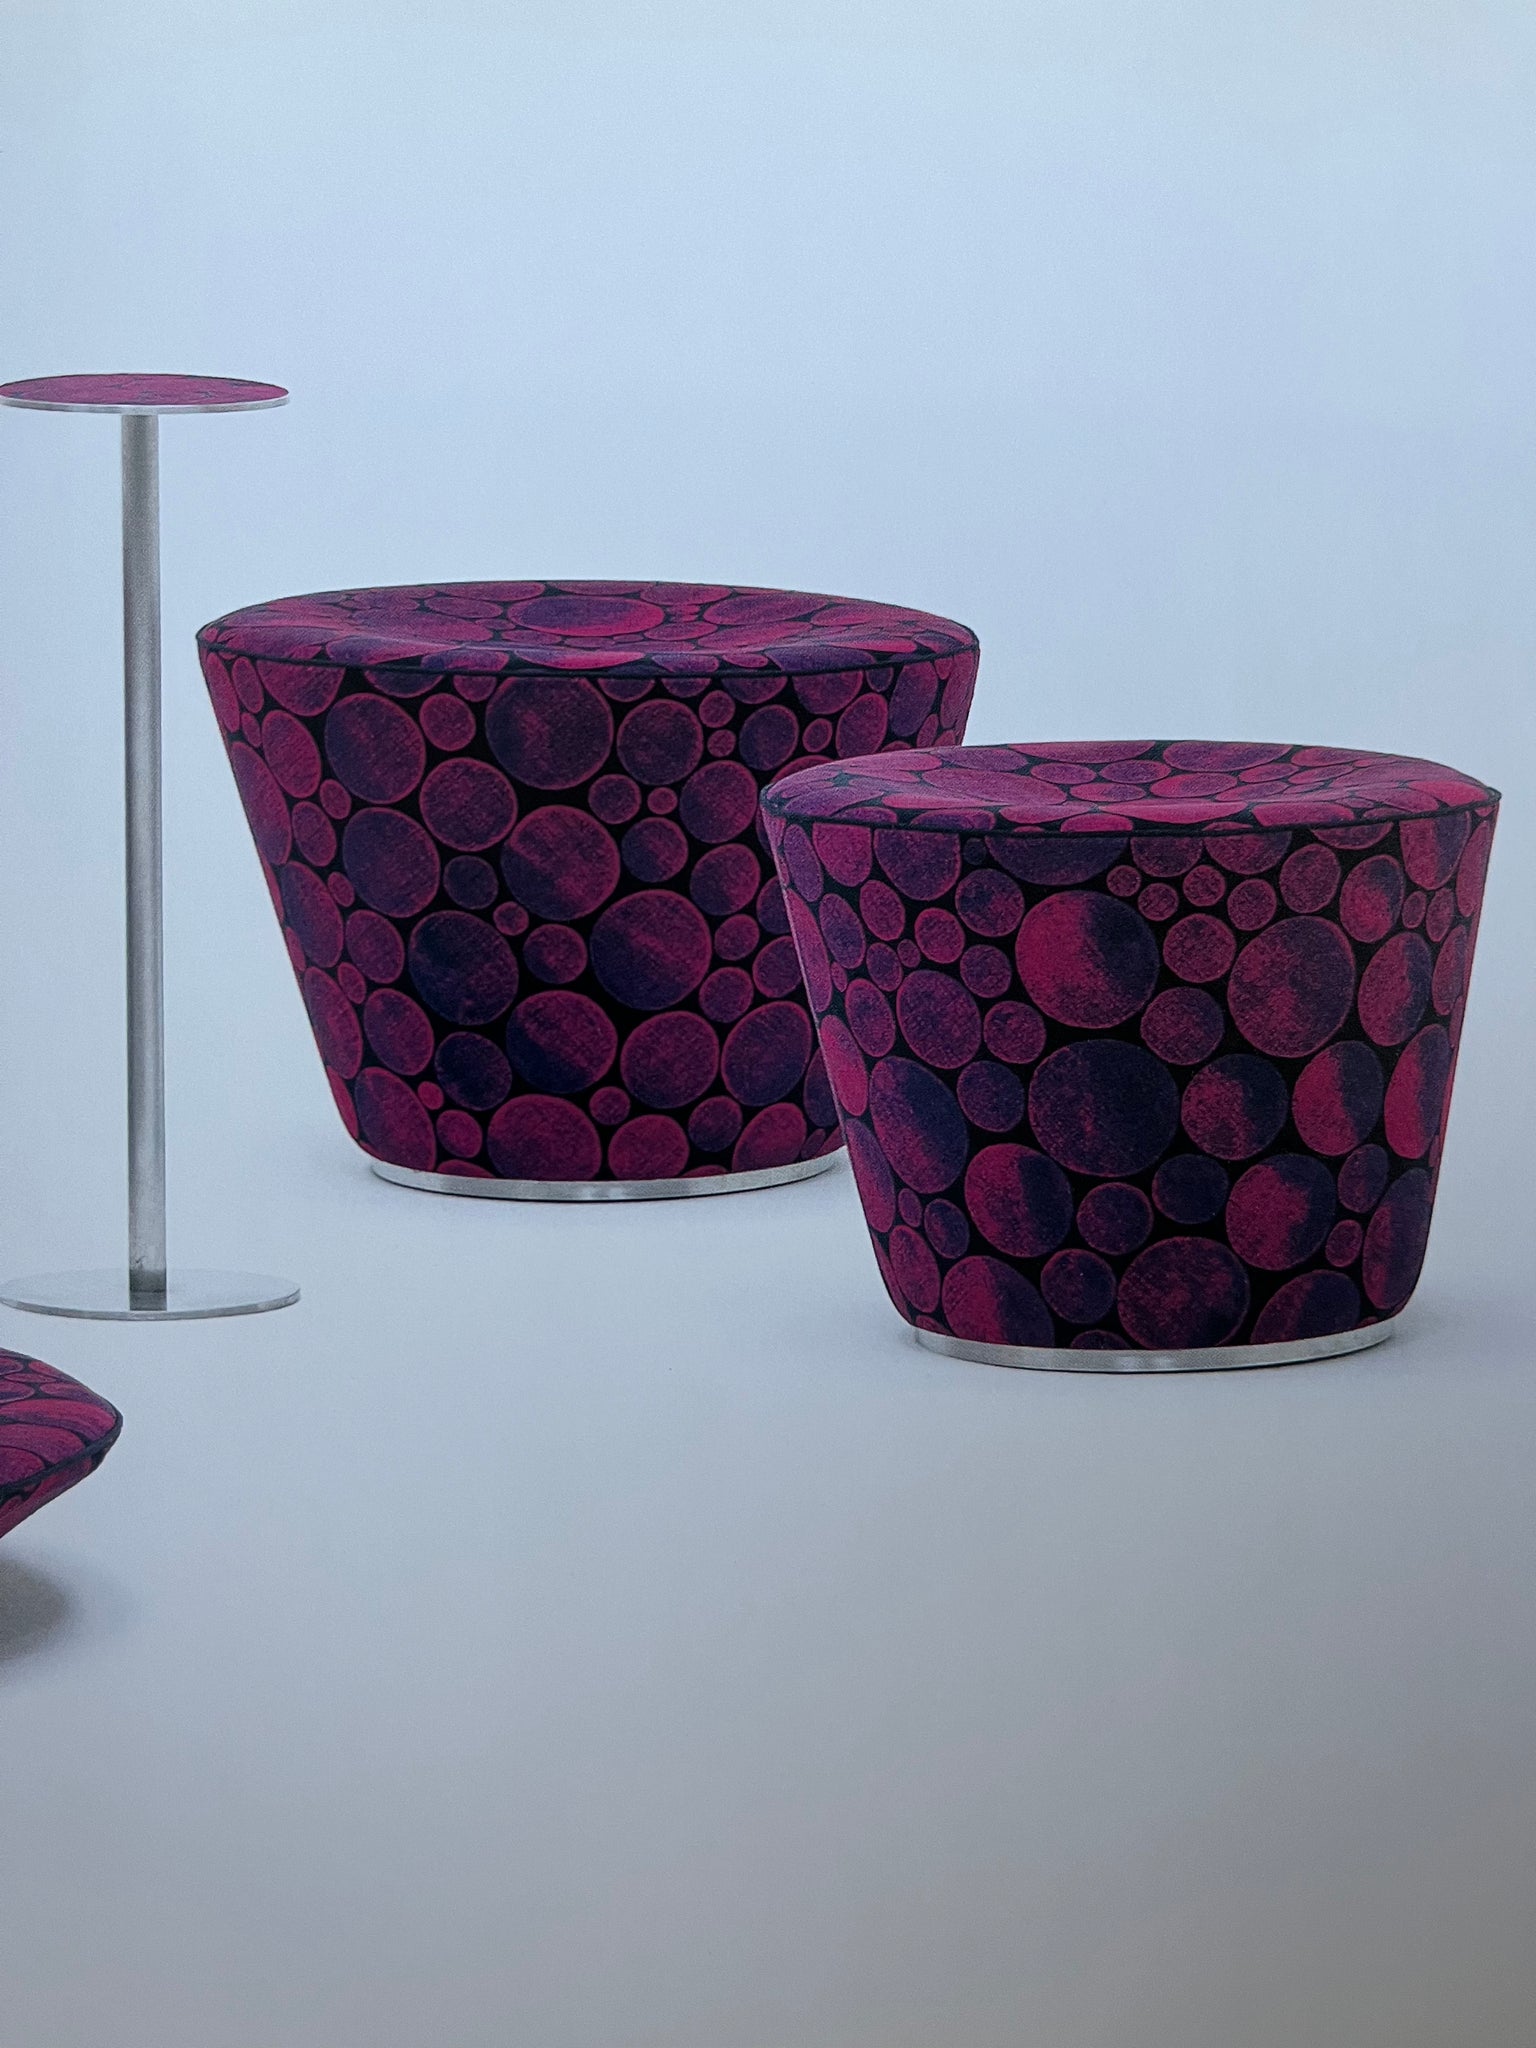 Yayoi Kusama: furniture by Graf : Decorative mode no. 3